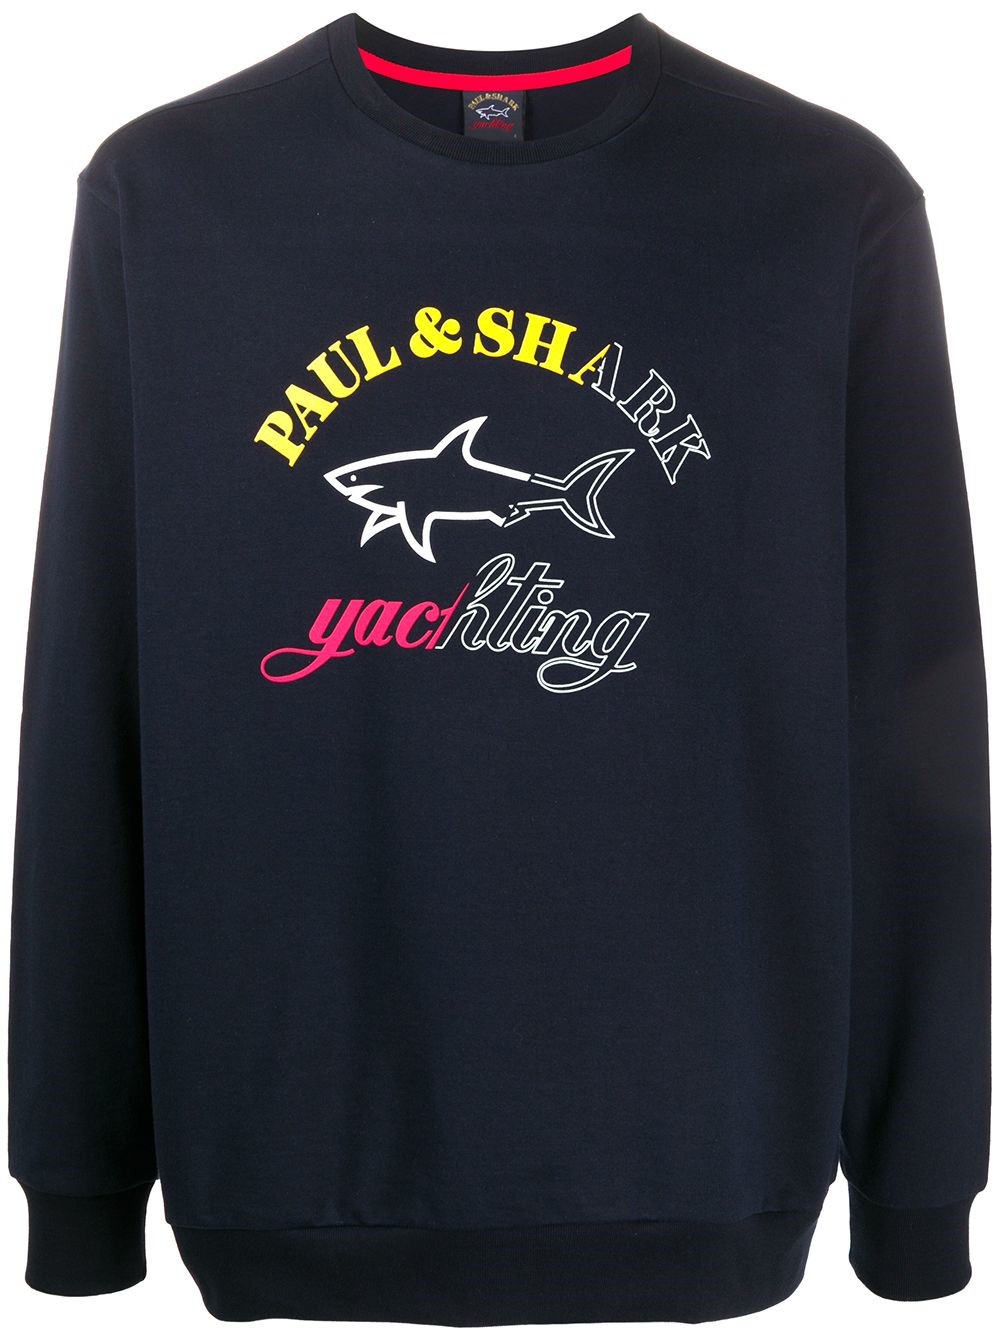 paul and shark logo sweatshirt